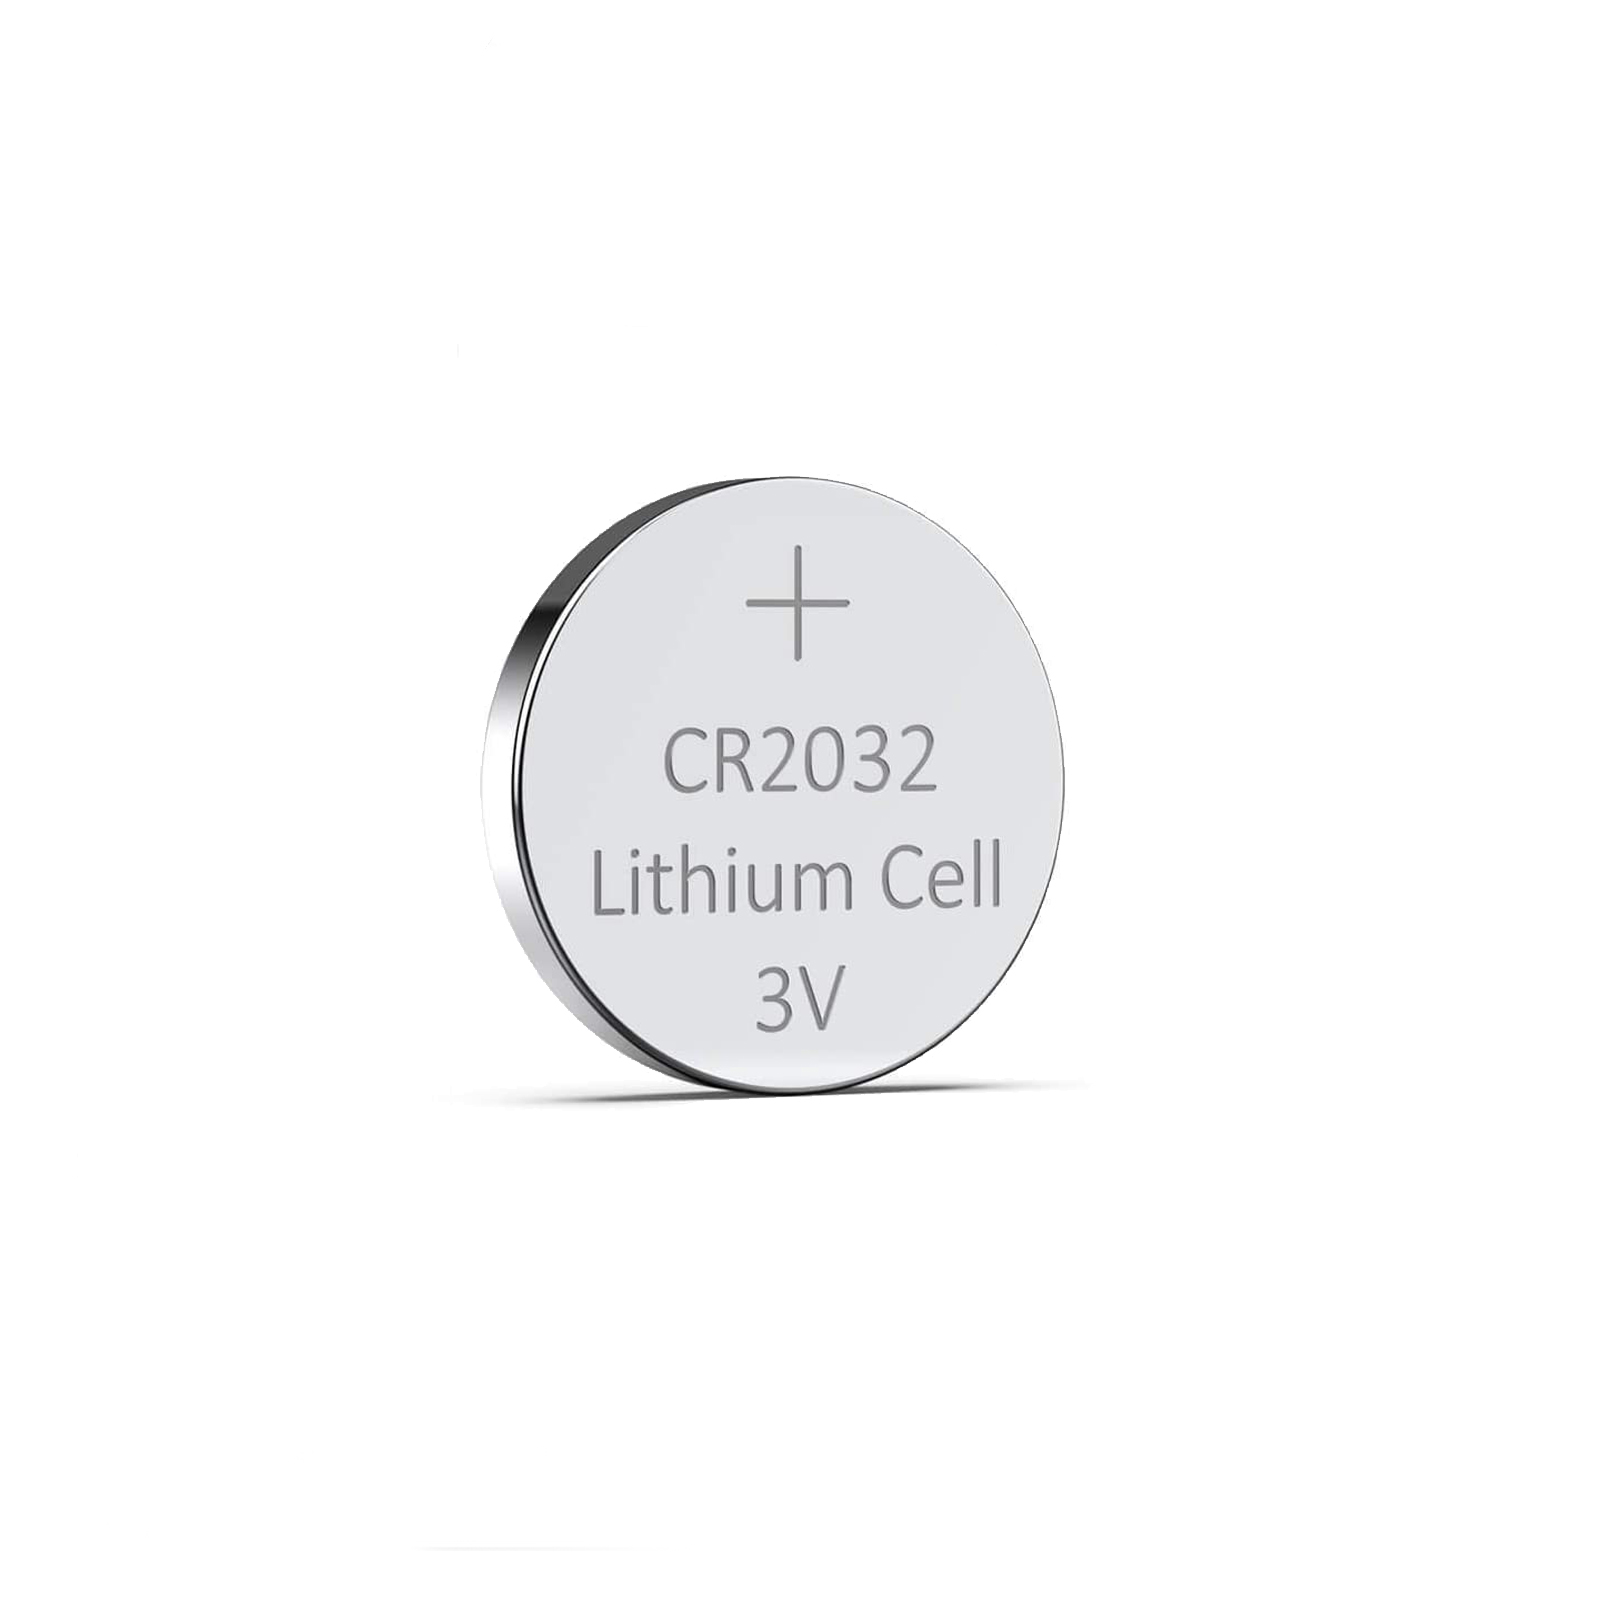 UL2032 Ultra High Capacity (Lithium, 3V, 220 mAh) Battery - Replacement for Dantona - 5004LC, Dantona - CR2032, Grainger - 4LW11, Rayovac - KECR2032-1, Sony - CR2032-B1A, SportDOG - RFA-35, SportDOG - RFA-35-11, Varta - 6032, Varta - 6032101031, Varta - 6032101501, Varta - CR2032 Batteries